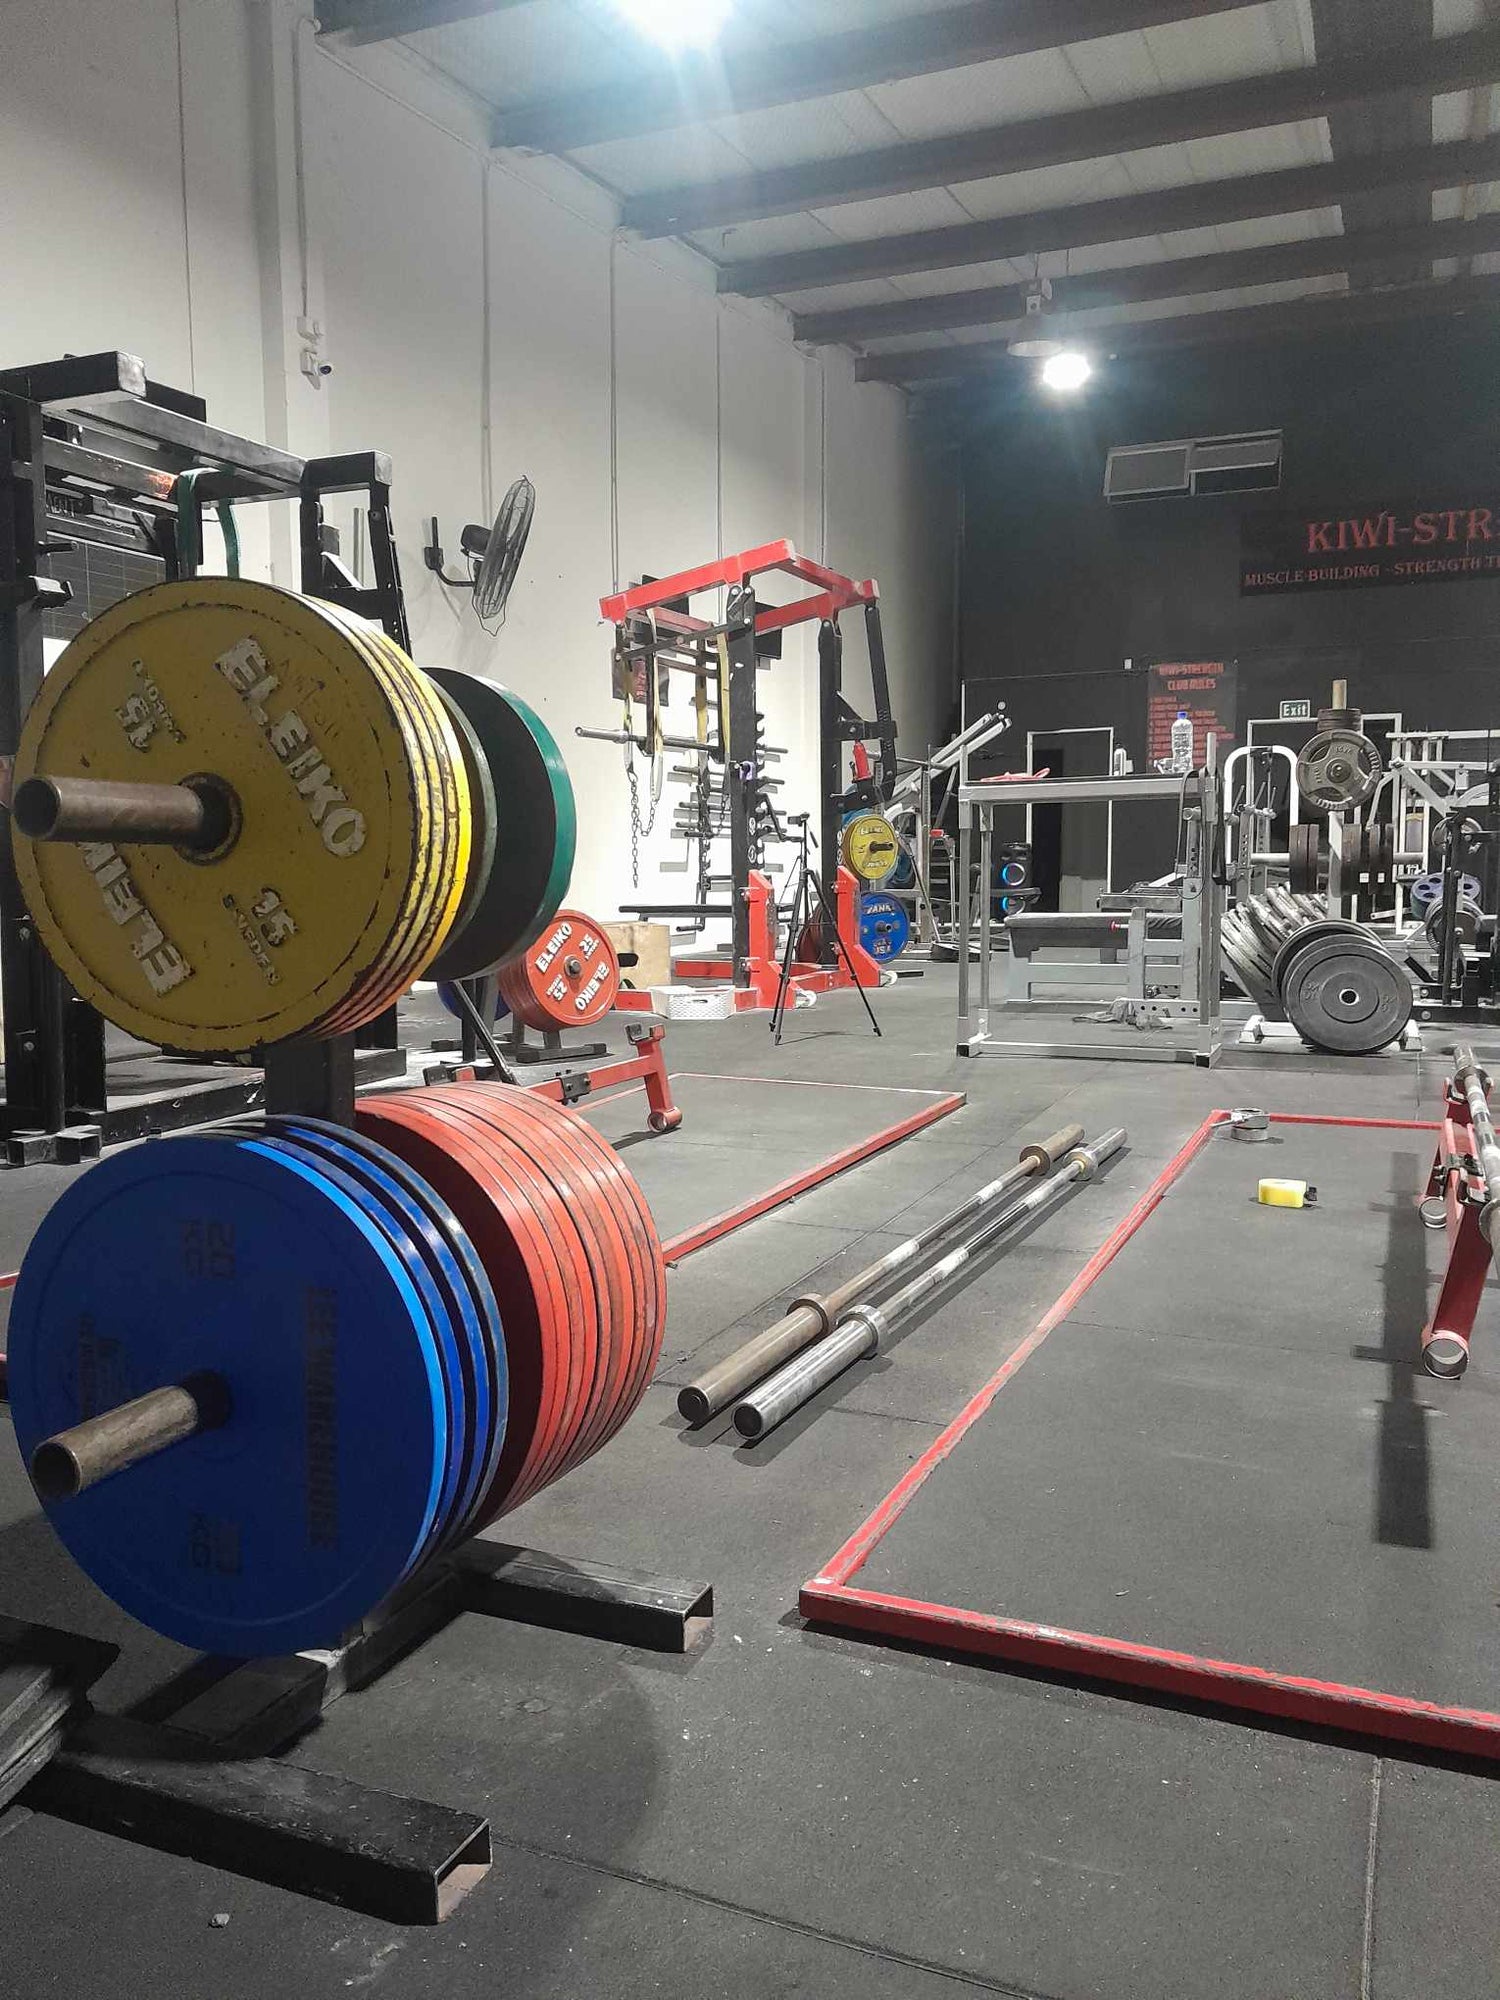 image showing kiwistrength gym and powerlifting plates, deadift bars, mono lifts, eleko rack and plates